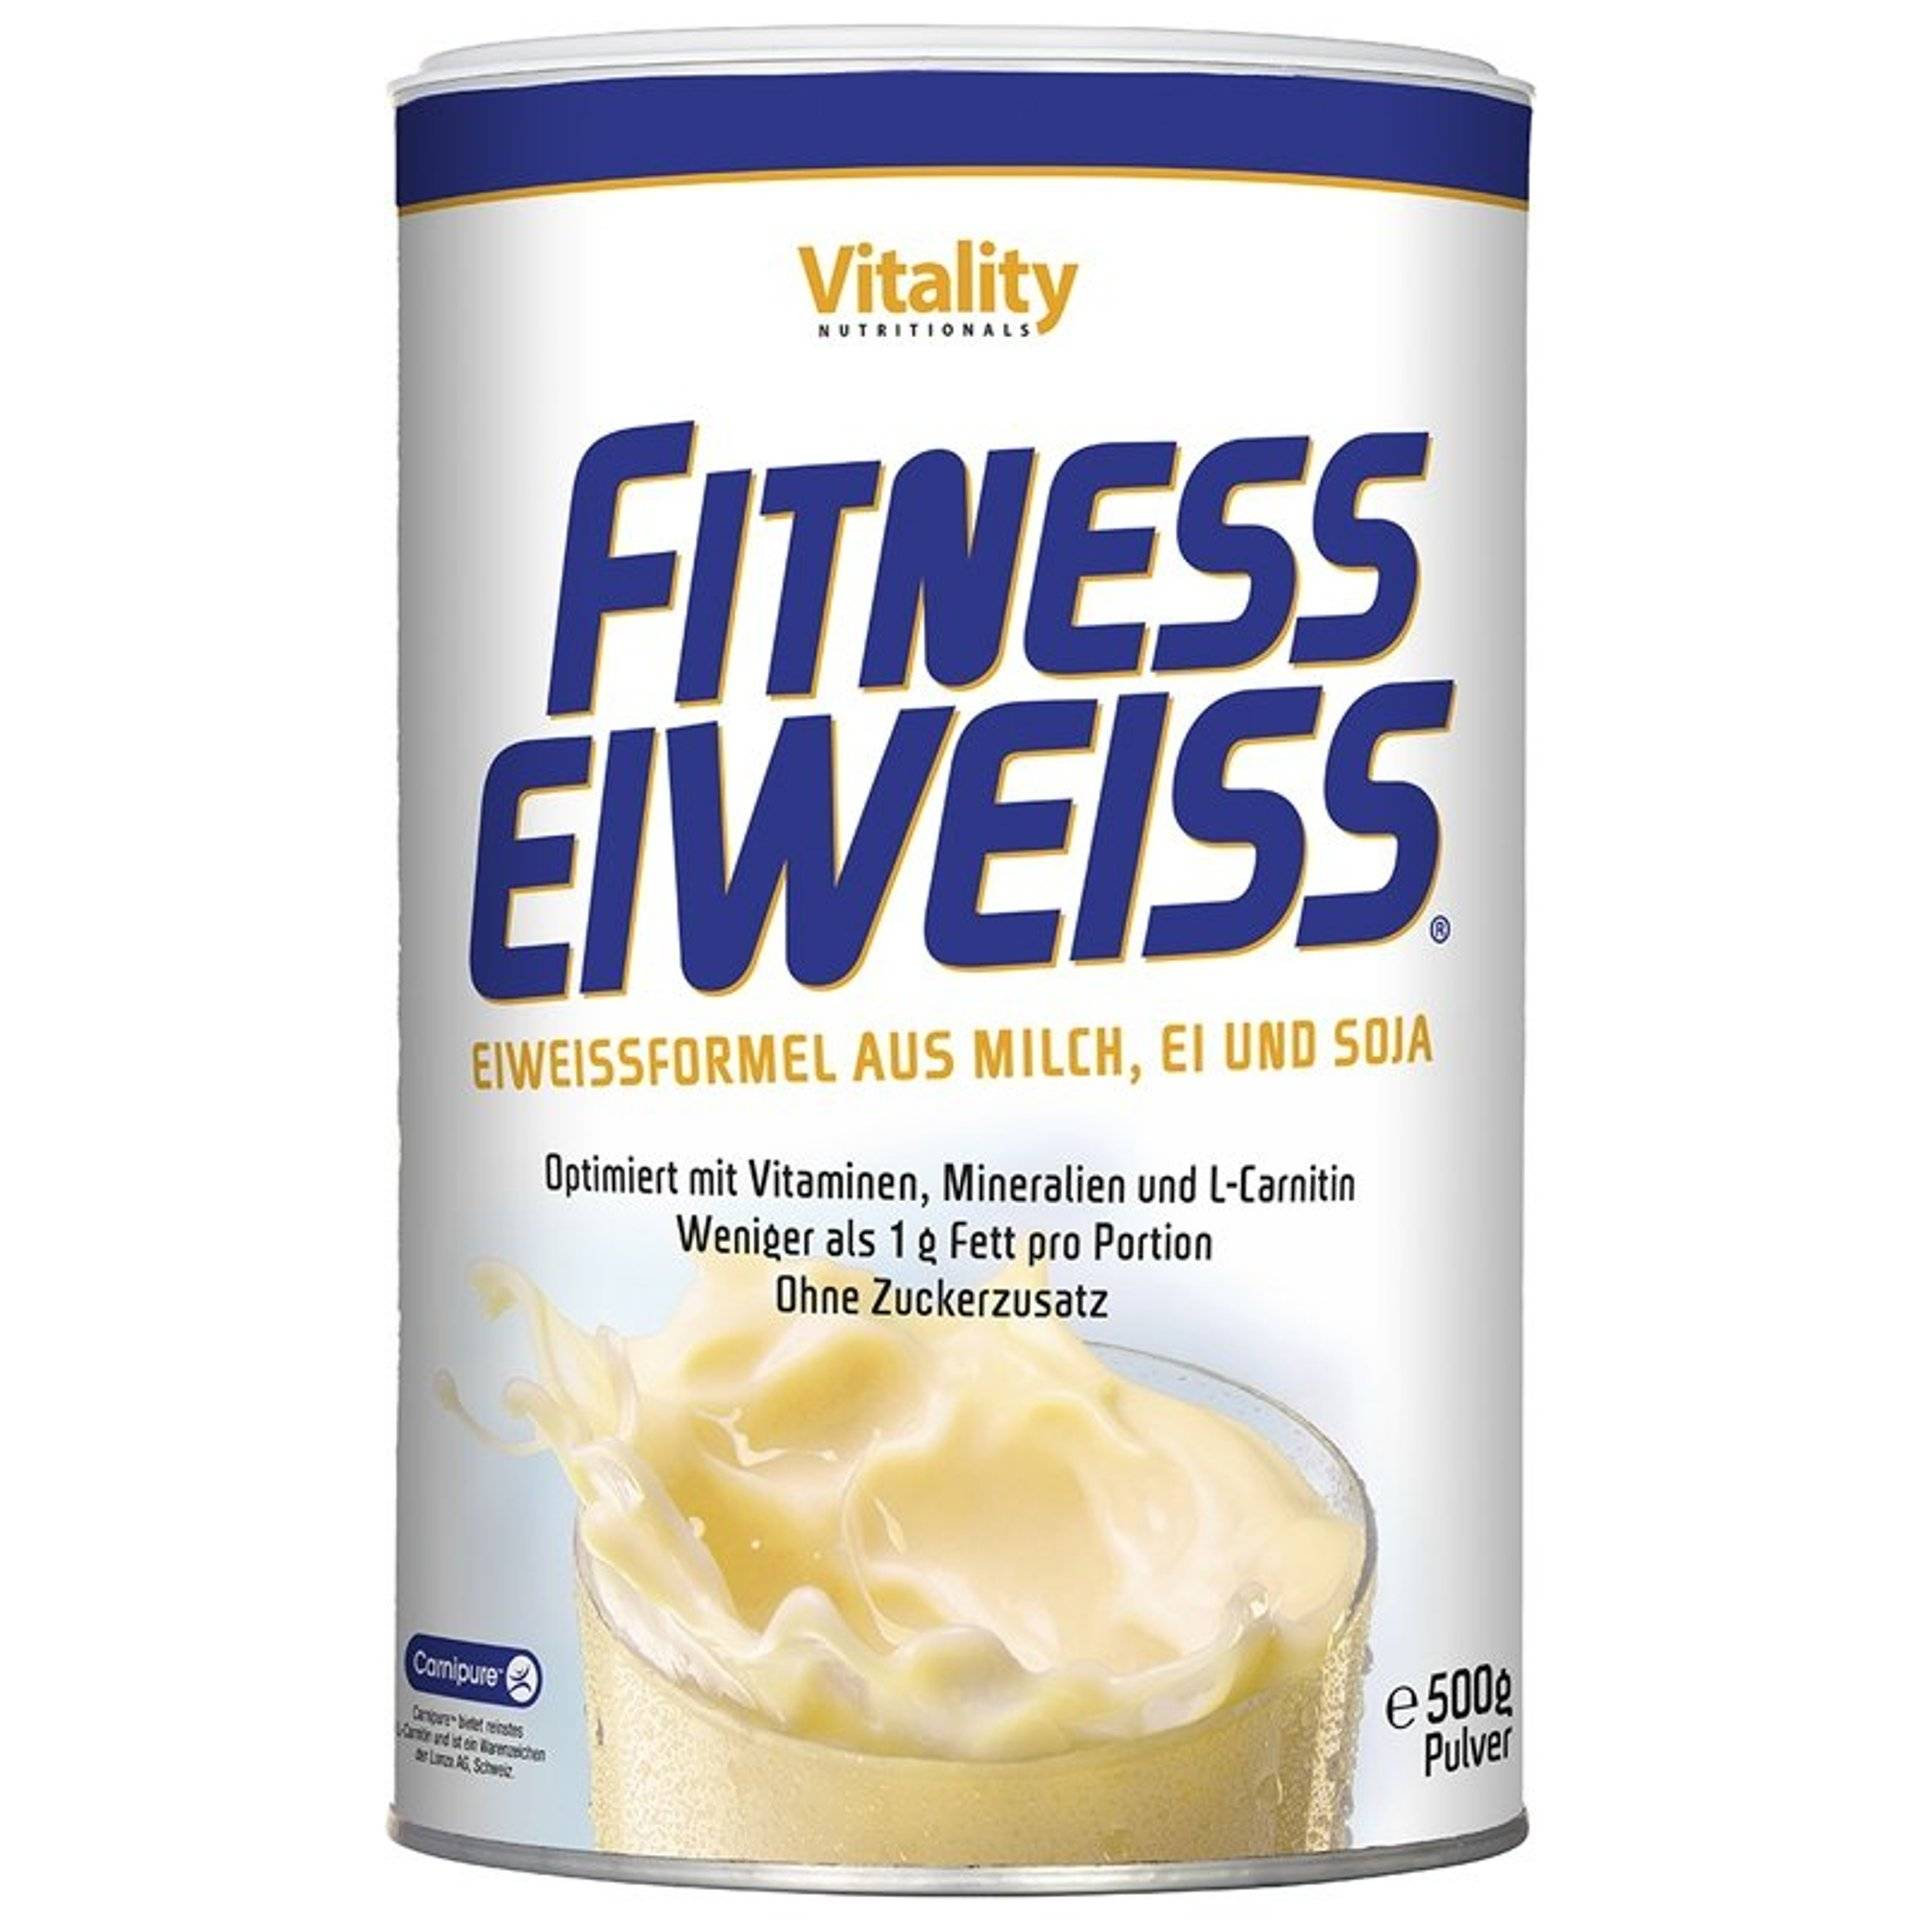 Fitness Eiweiss, Schoko-Nuss